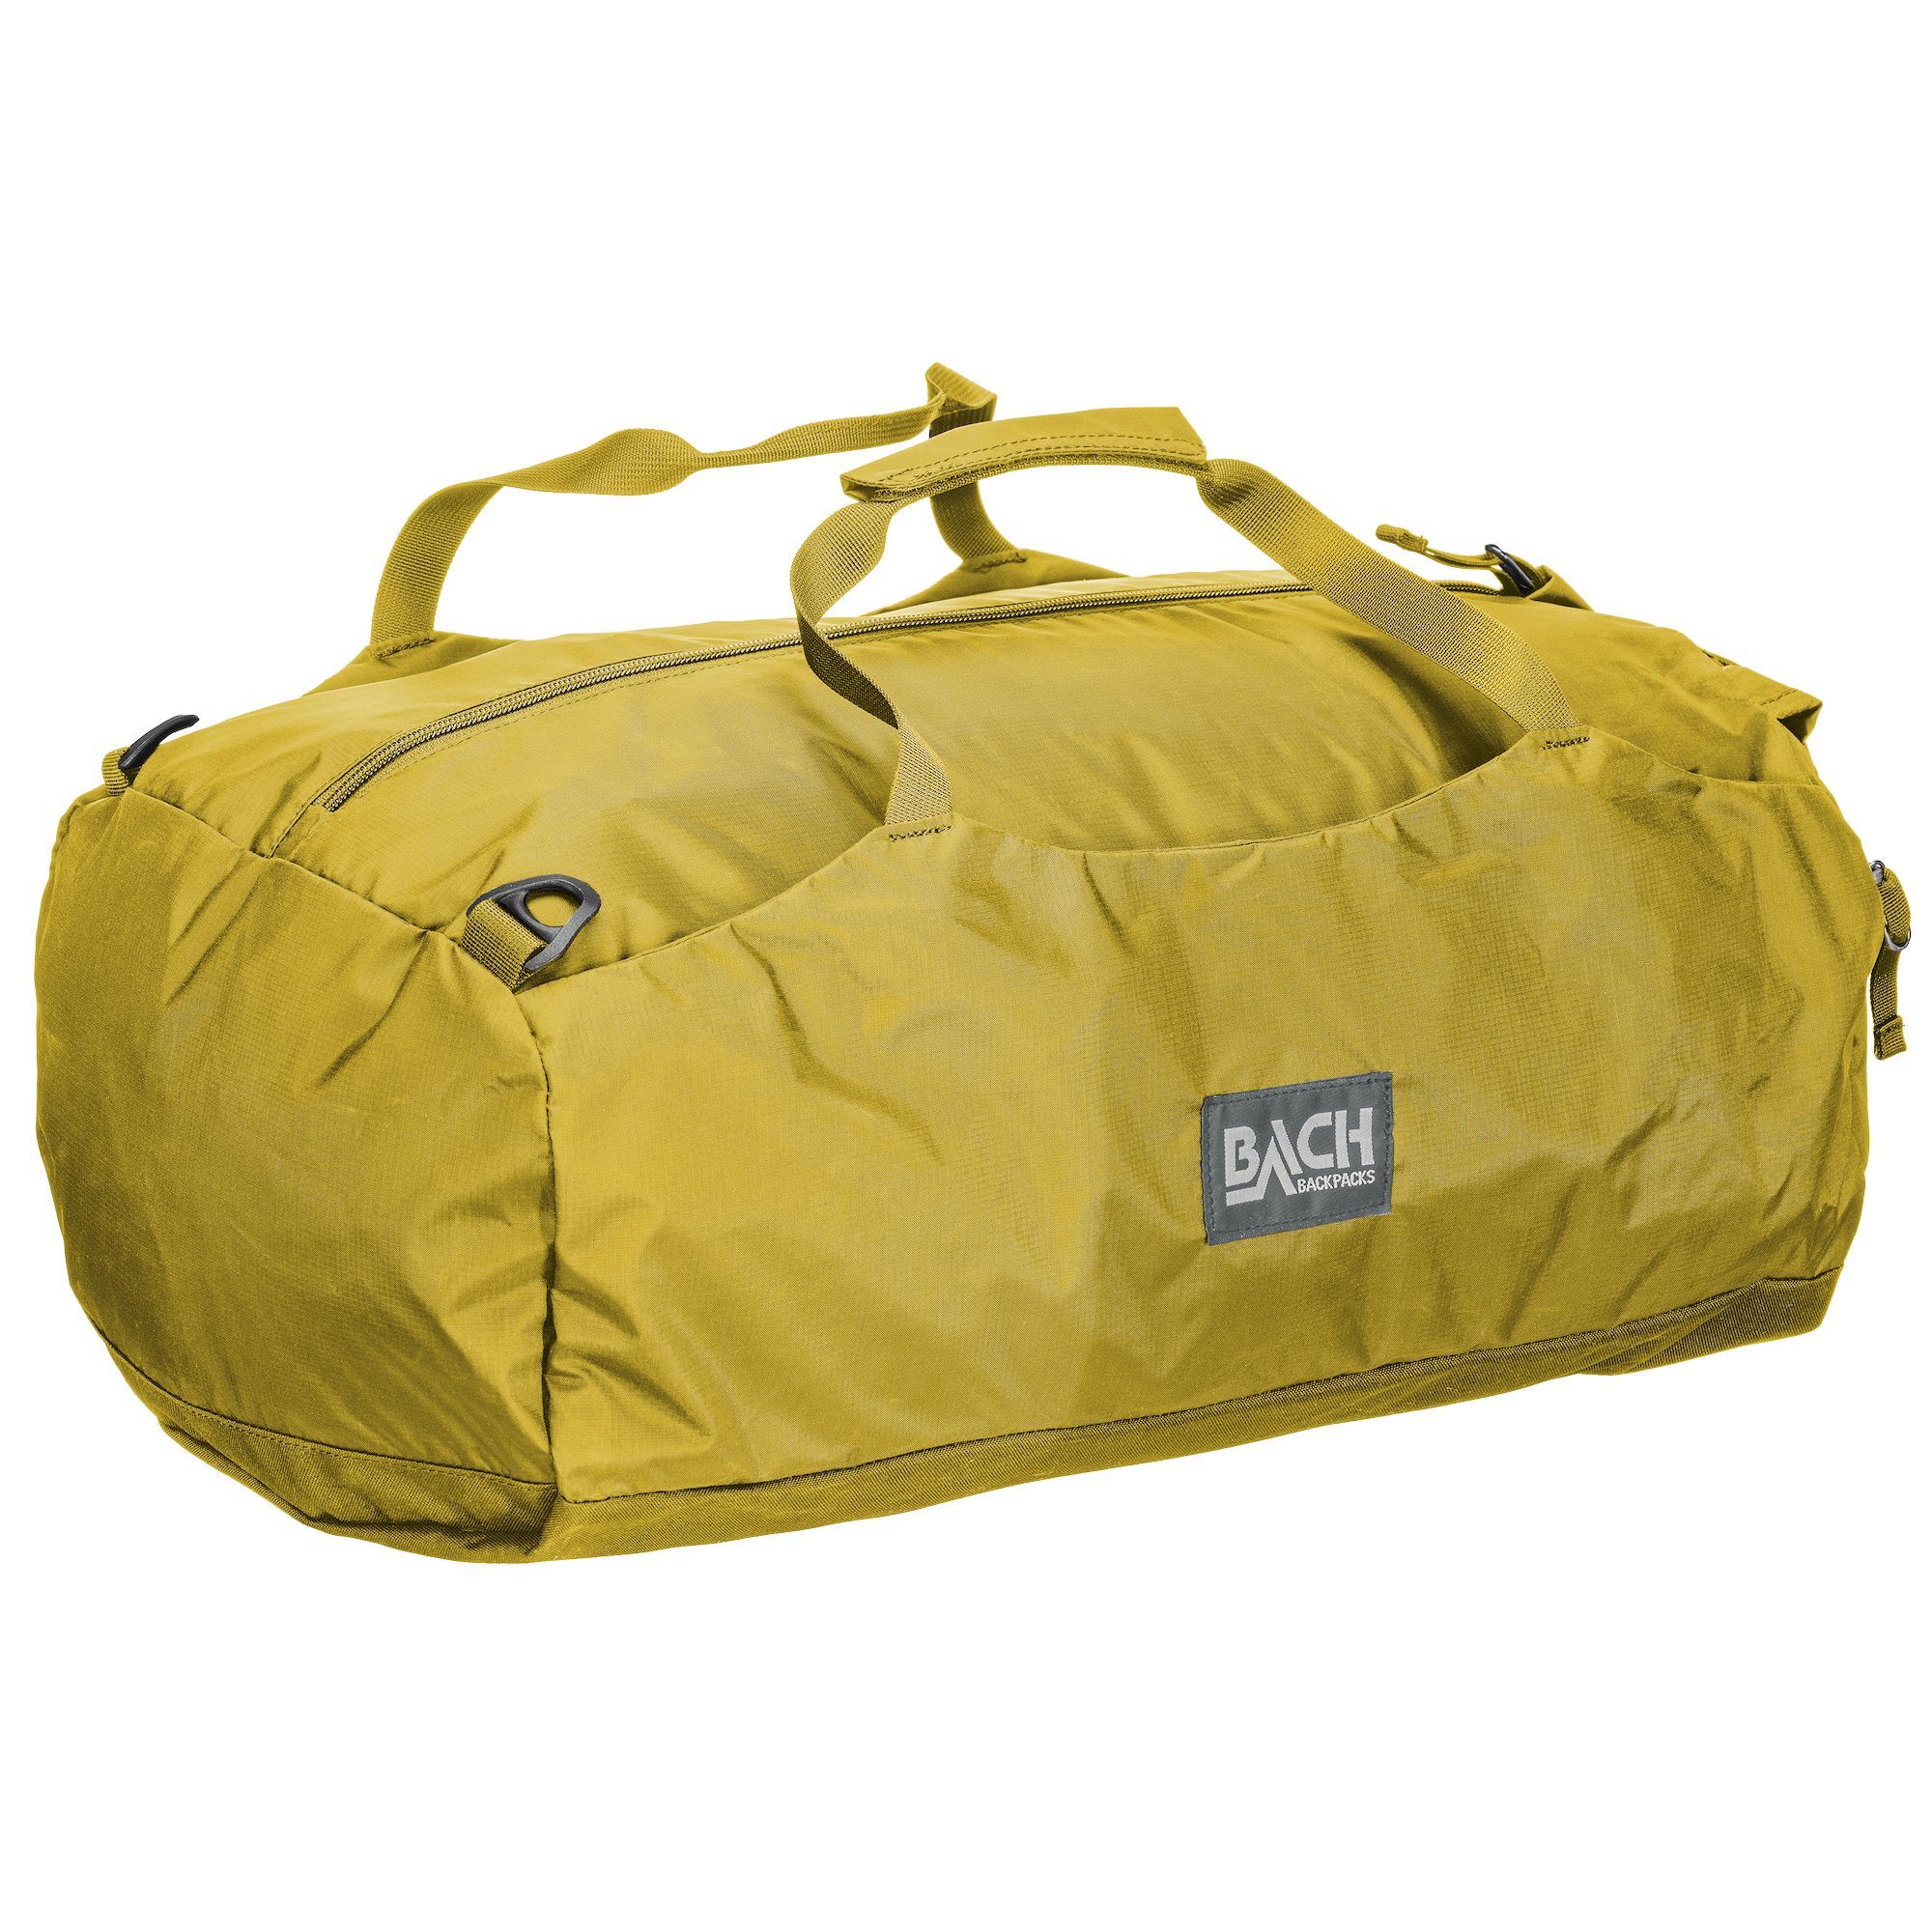 Bach Team Duffel Light - Travel bag | Hardloop